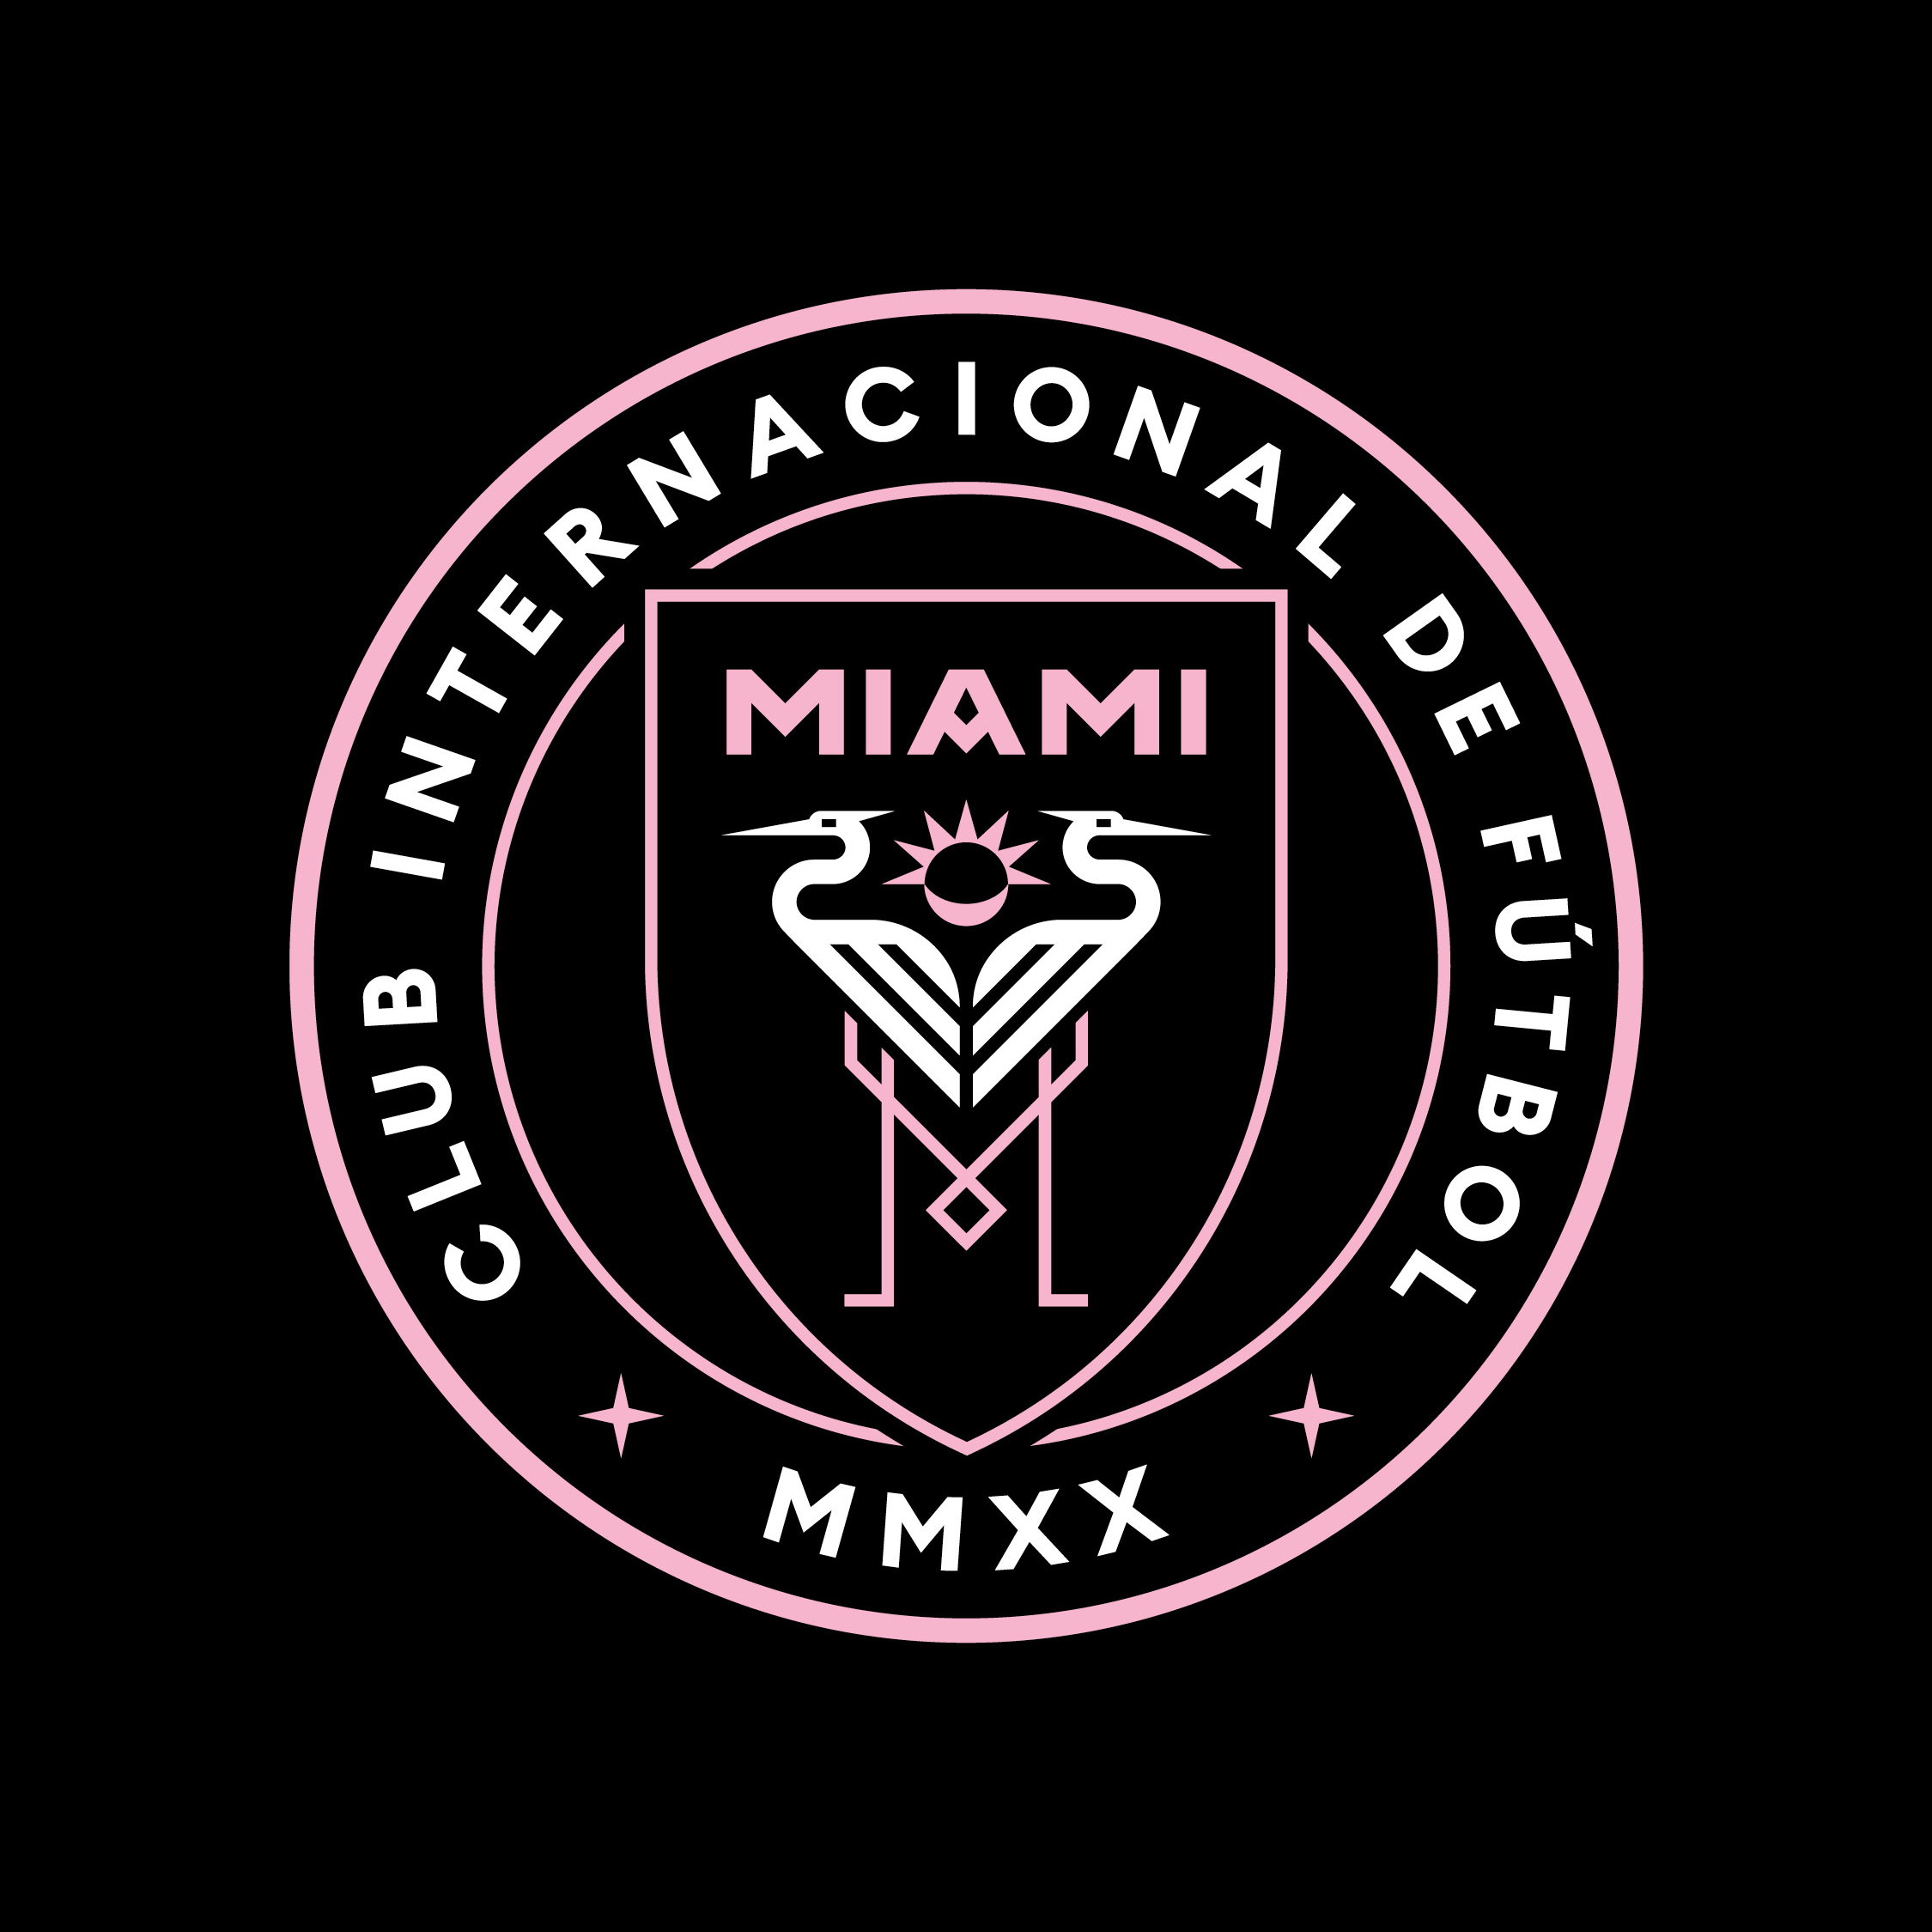 Miami Logo - Brand New: New Logo for Club Internacional de Fútbol Miami